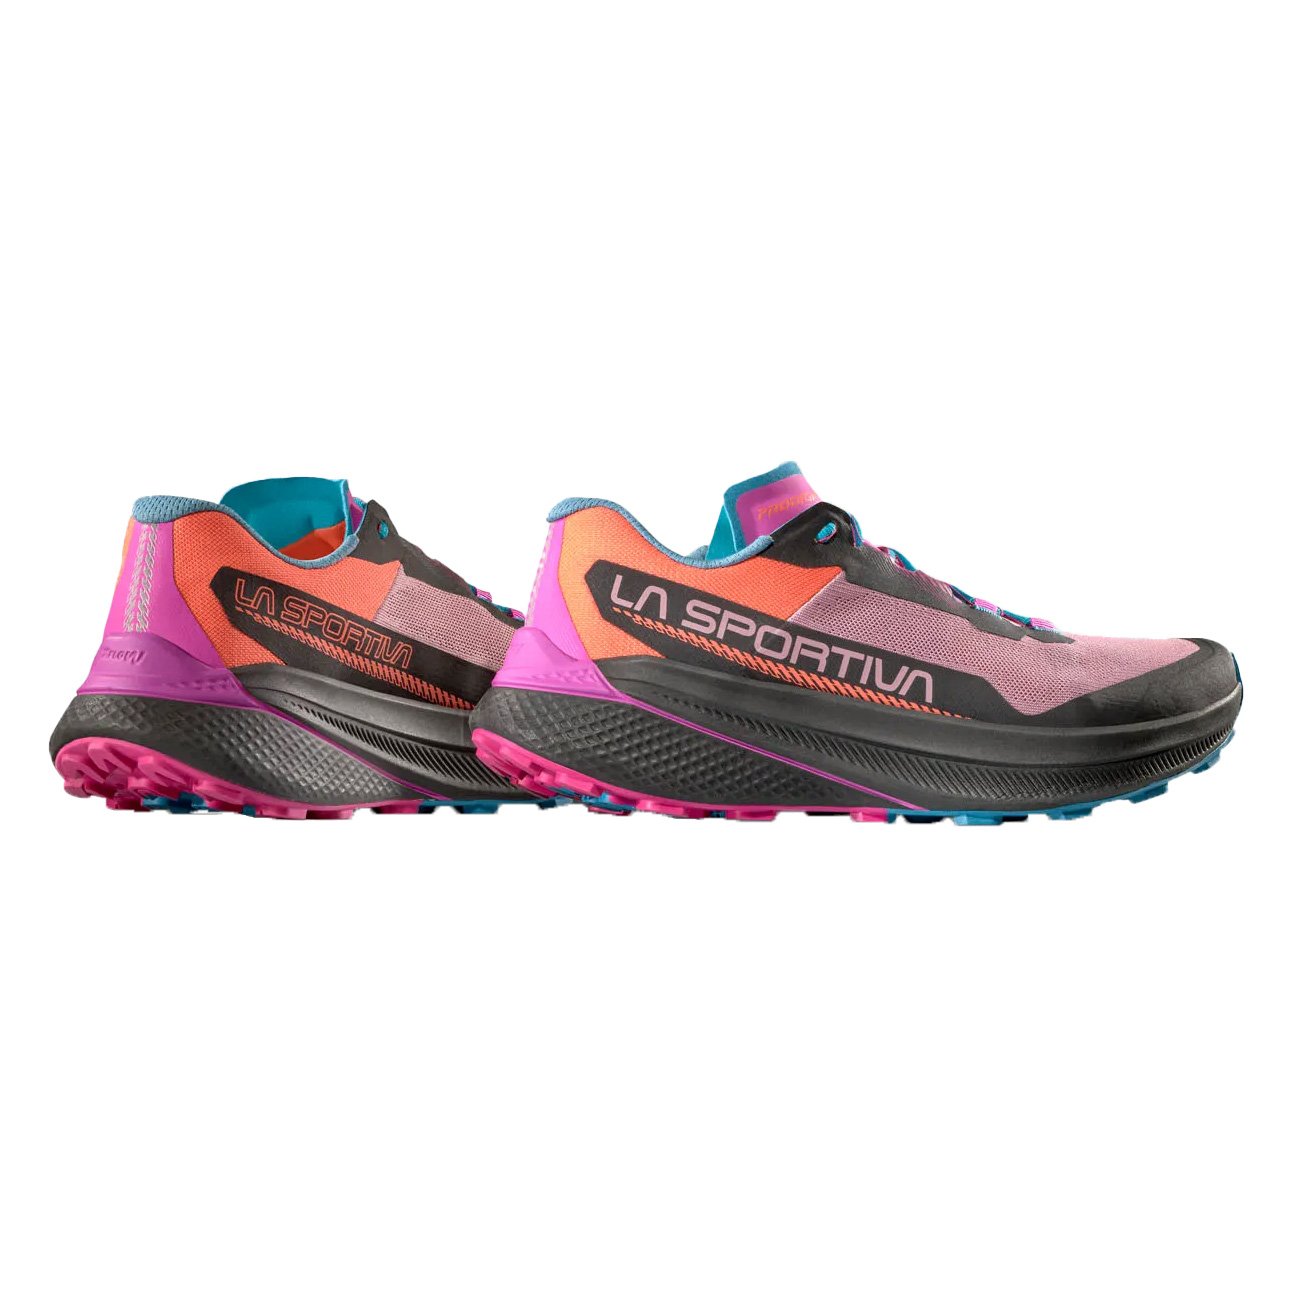 La Sportiva Prodigio Women's Trail Running Shoes